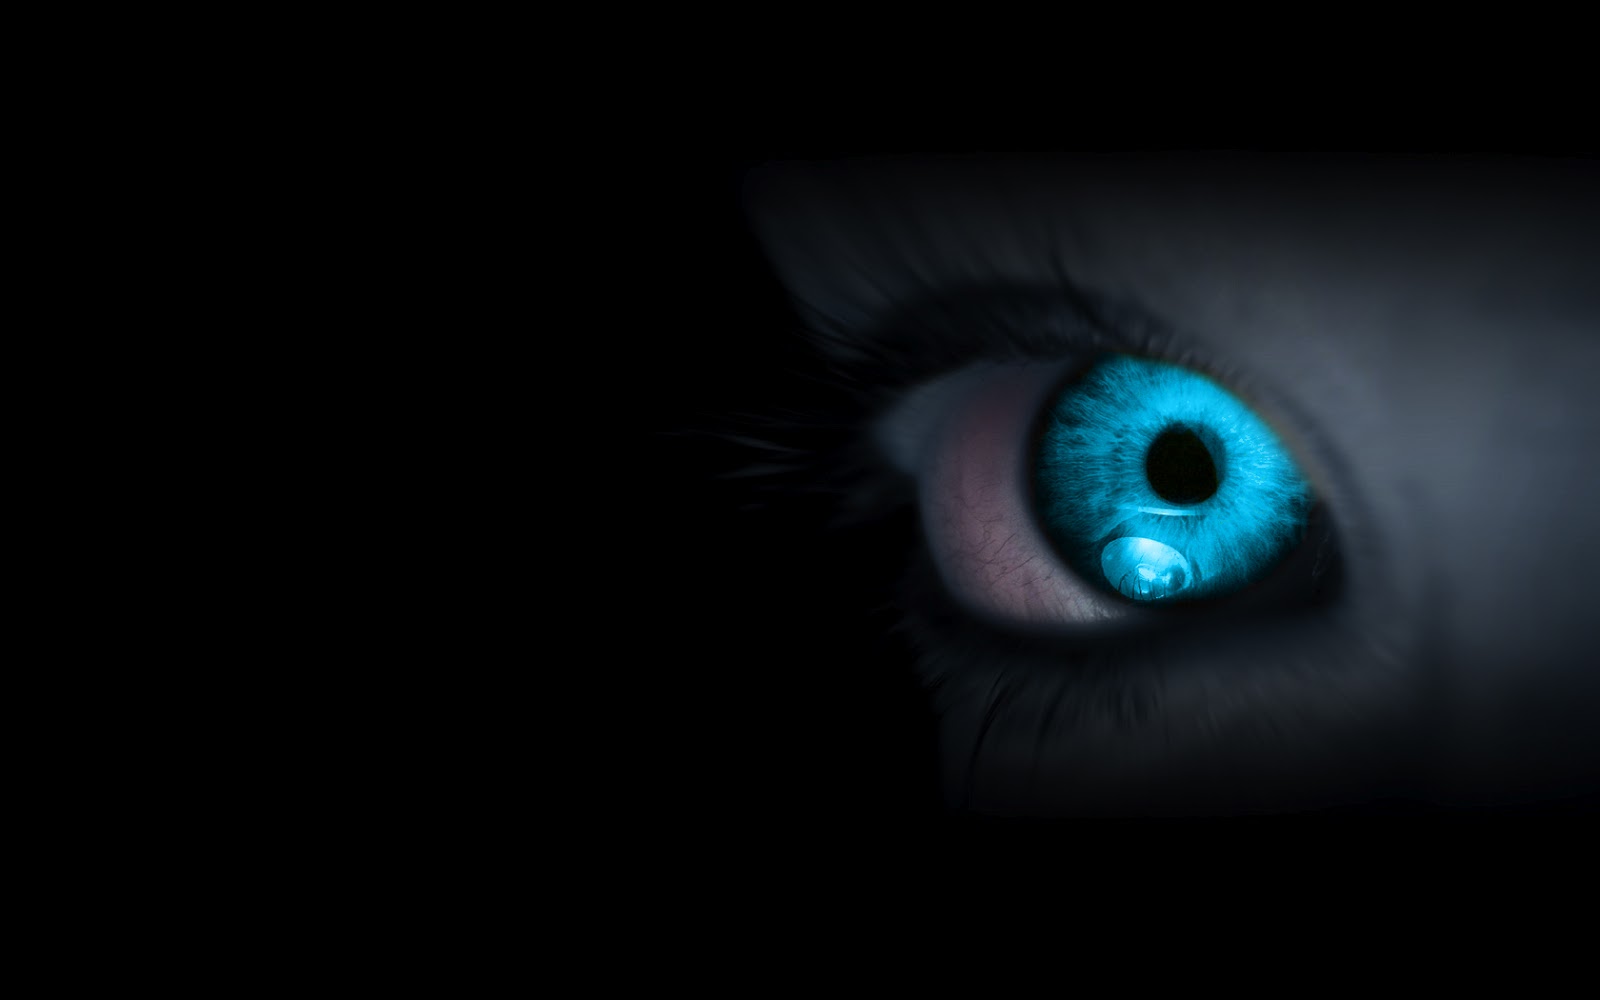 100% Free Hd Quality Desktop Images - Blue Eyes Black Background , HD Wallpaper & Backgrounds